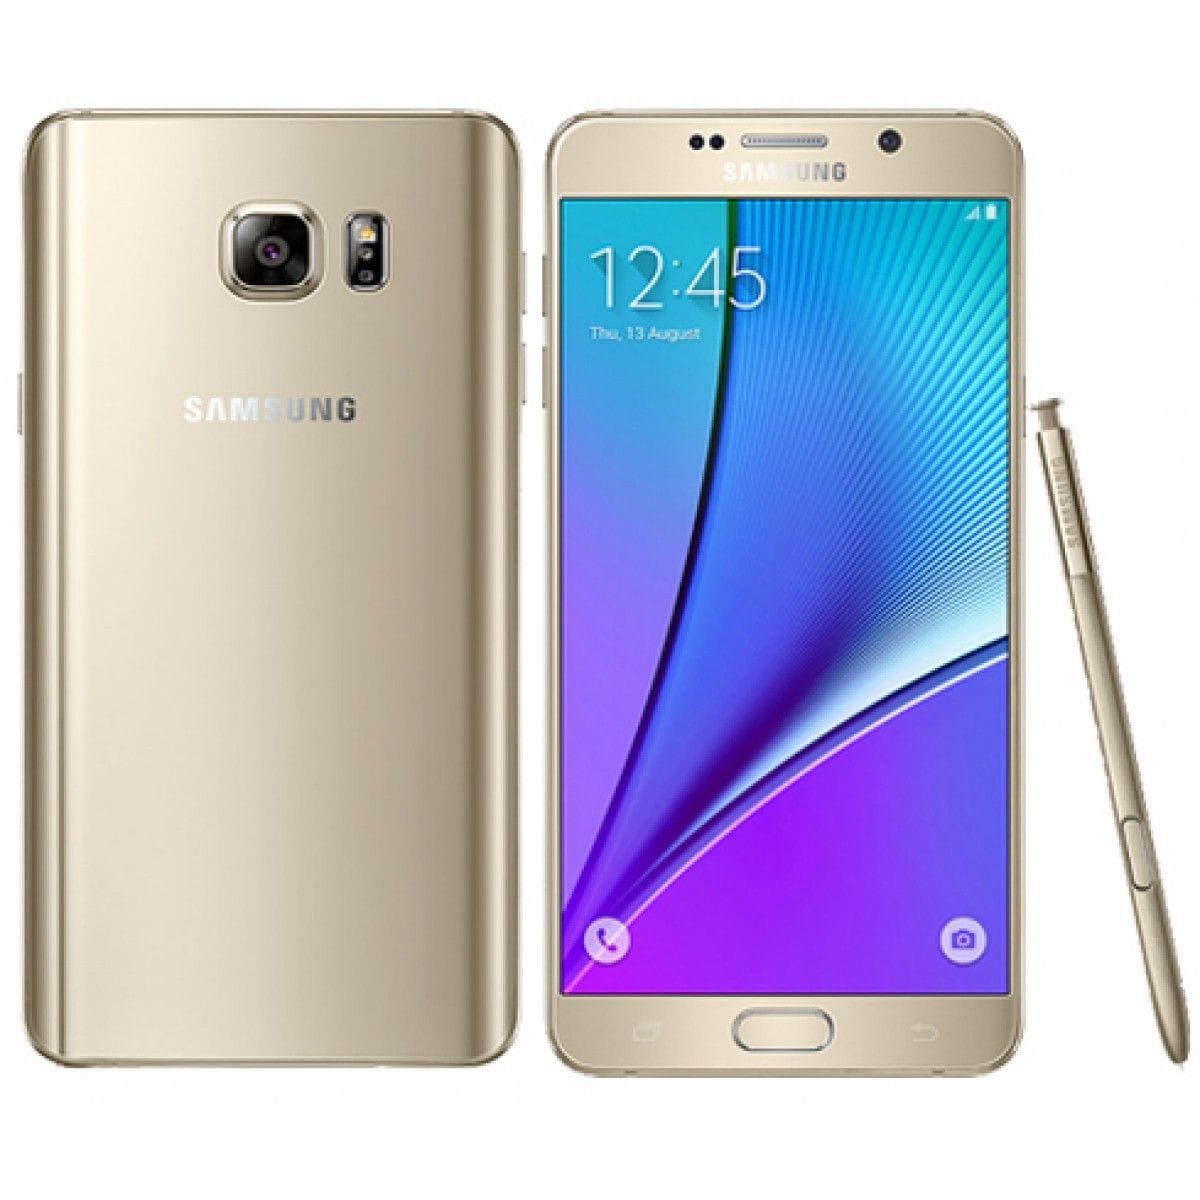 Samsung Galaxy Note 5 Platinum Gold - Verizon Unlocked - CDMA-GSM